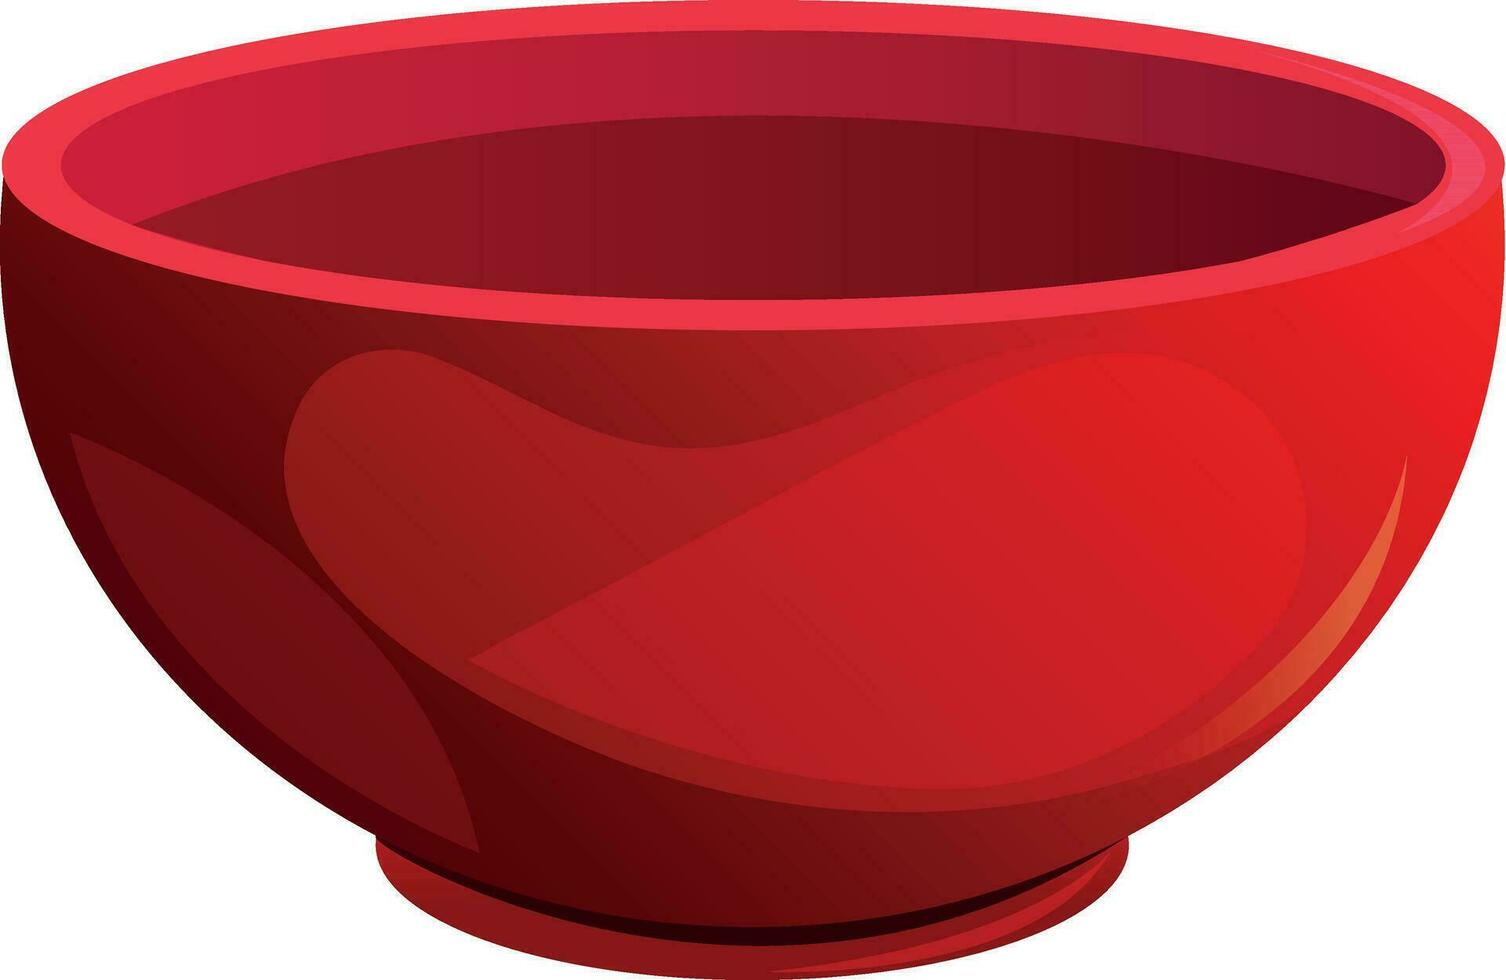 Red empty ceramic bowl. Kitchenware, kitchen utensil. Cartoon vector illustration.